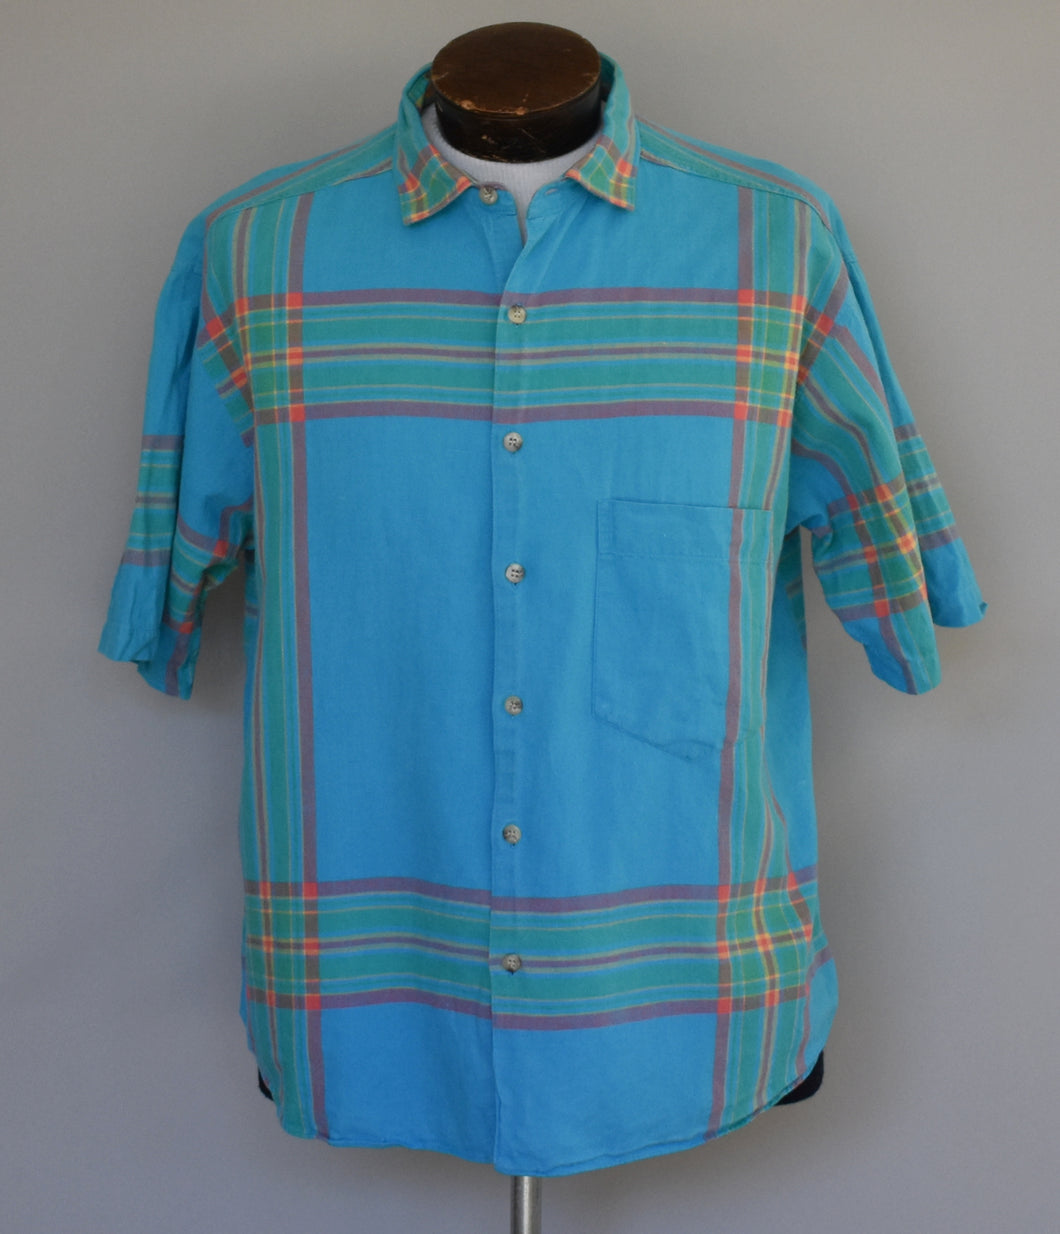 Vintage 80s Plaid Button Front Shirt Size Large to XL